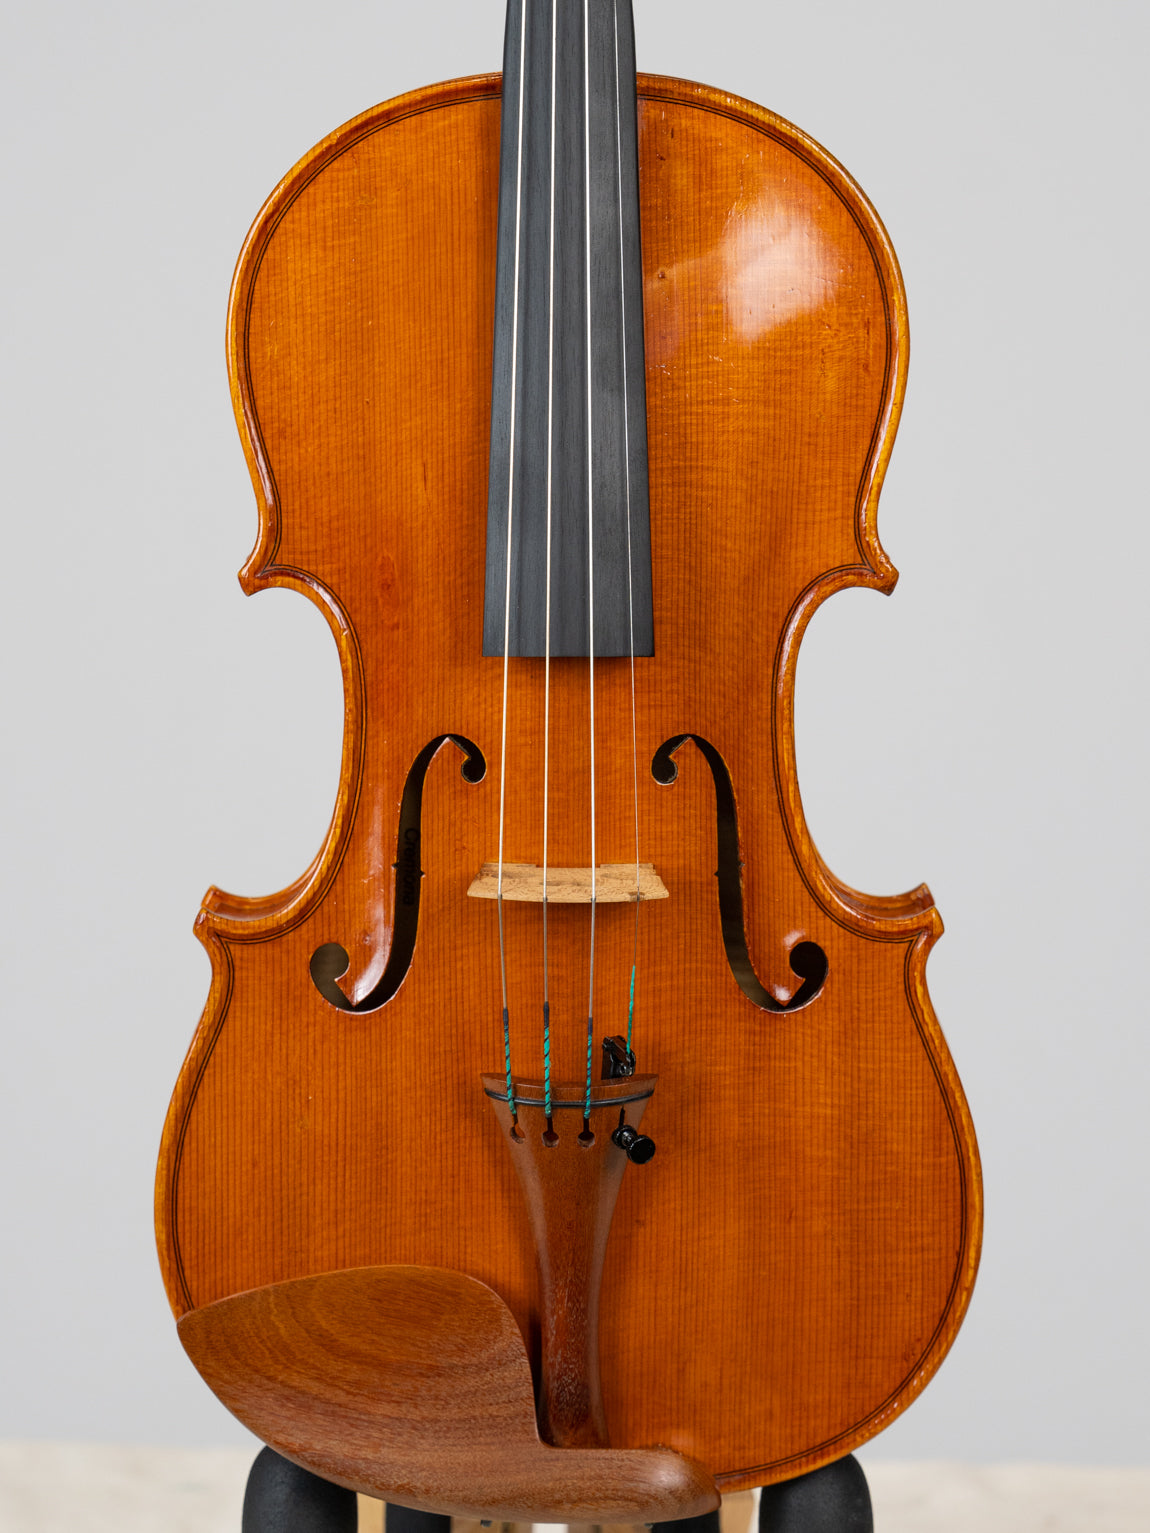 A. Stradivari 1715 仿古小提琴 作者Roberto Cavagnoli